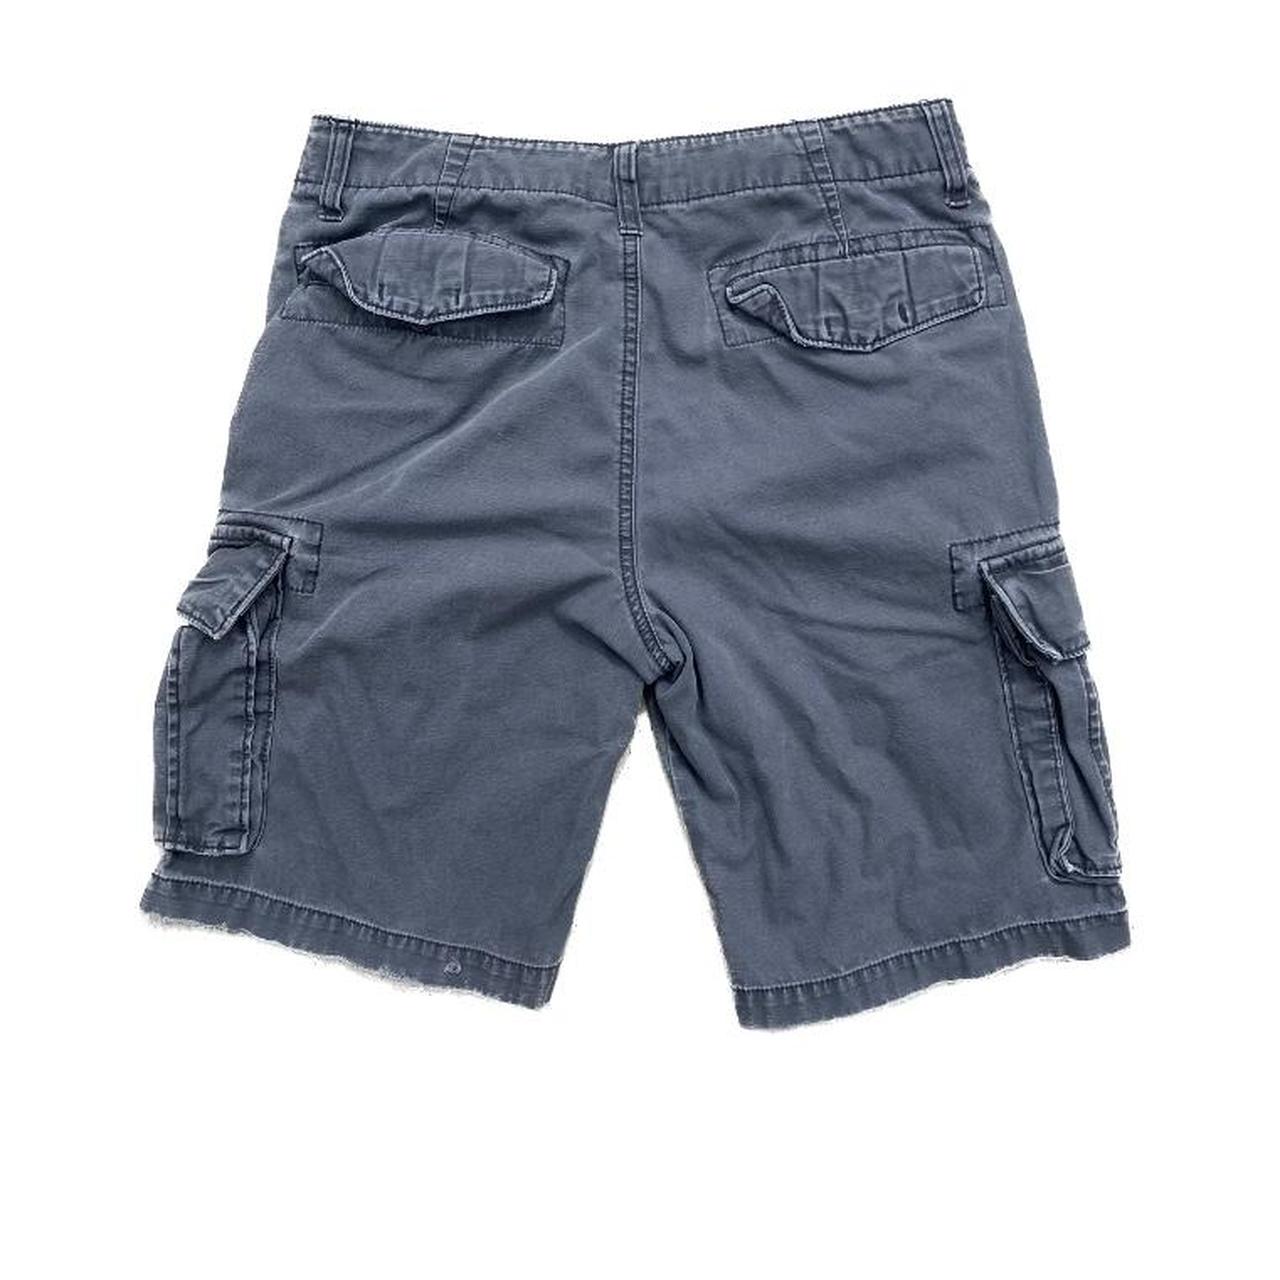 Men's Shorts (2)